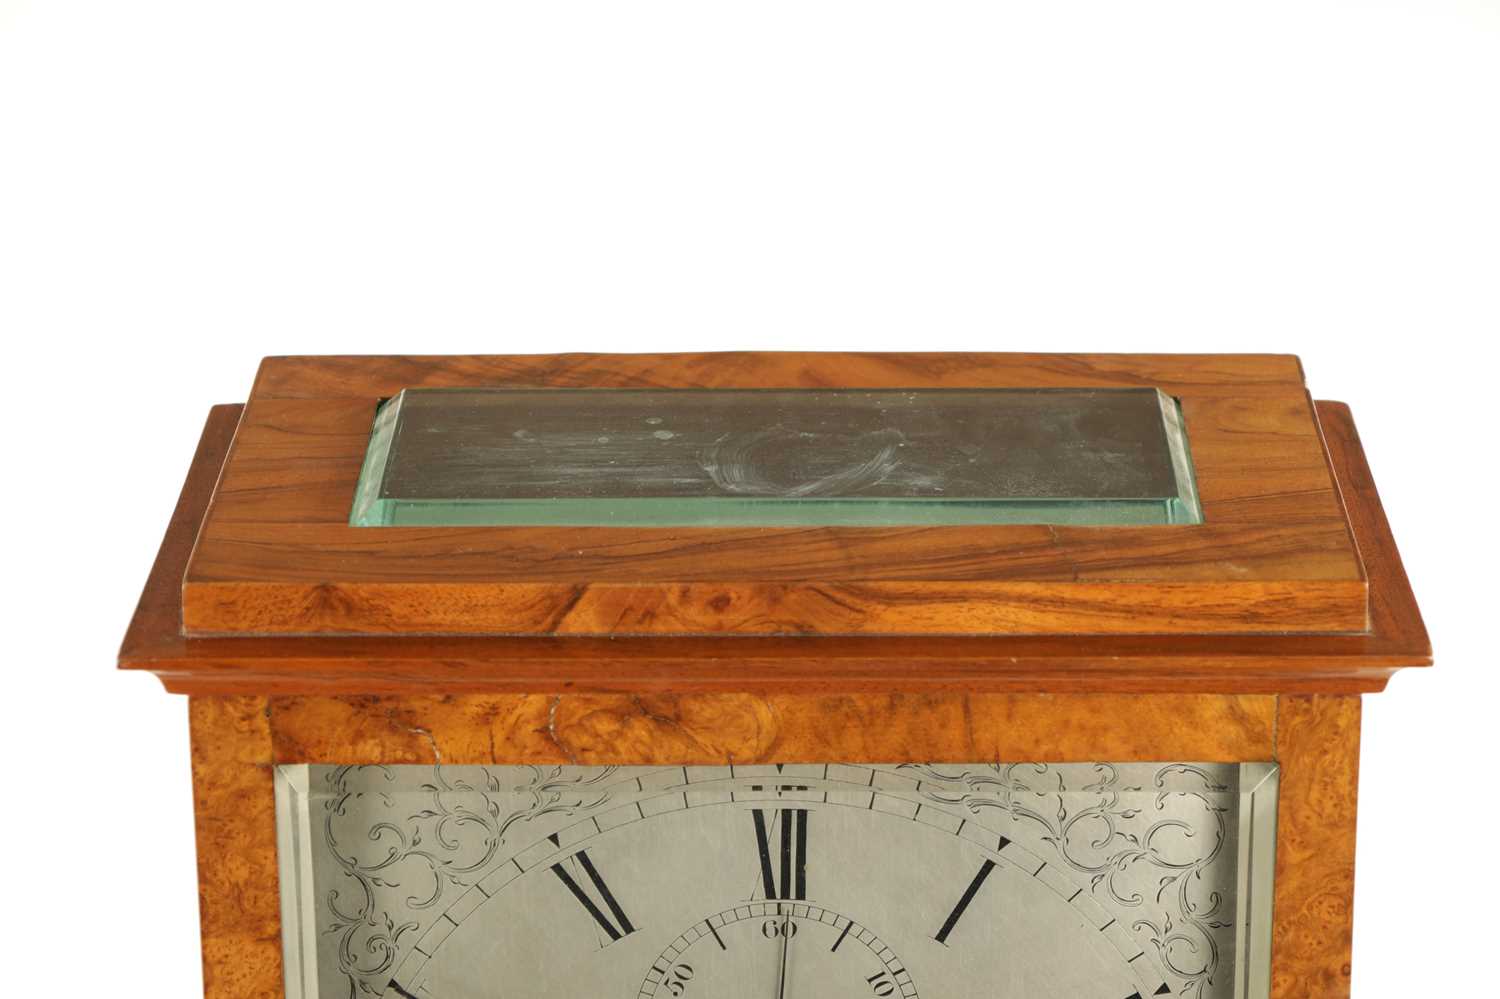 NORMAN, PIMLICO. A LARGE MID 19TH CENTURY BURR WALNUT CASED MONTH DURATION TABLE REGULATOR CLOCK - Bild 3 aus 14